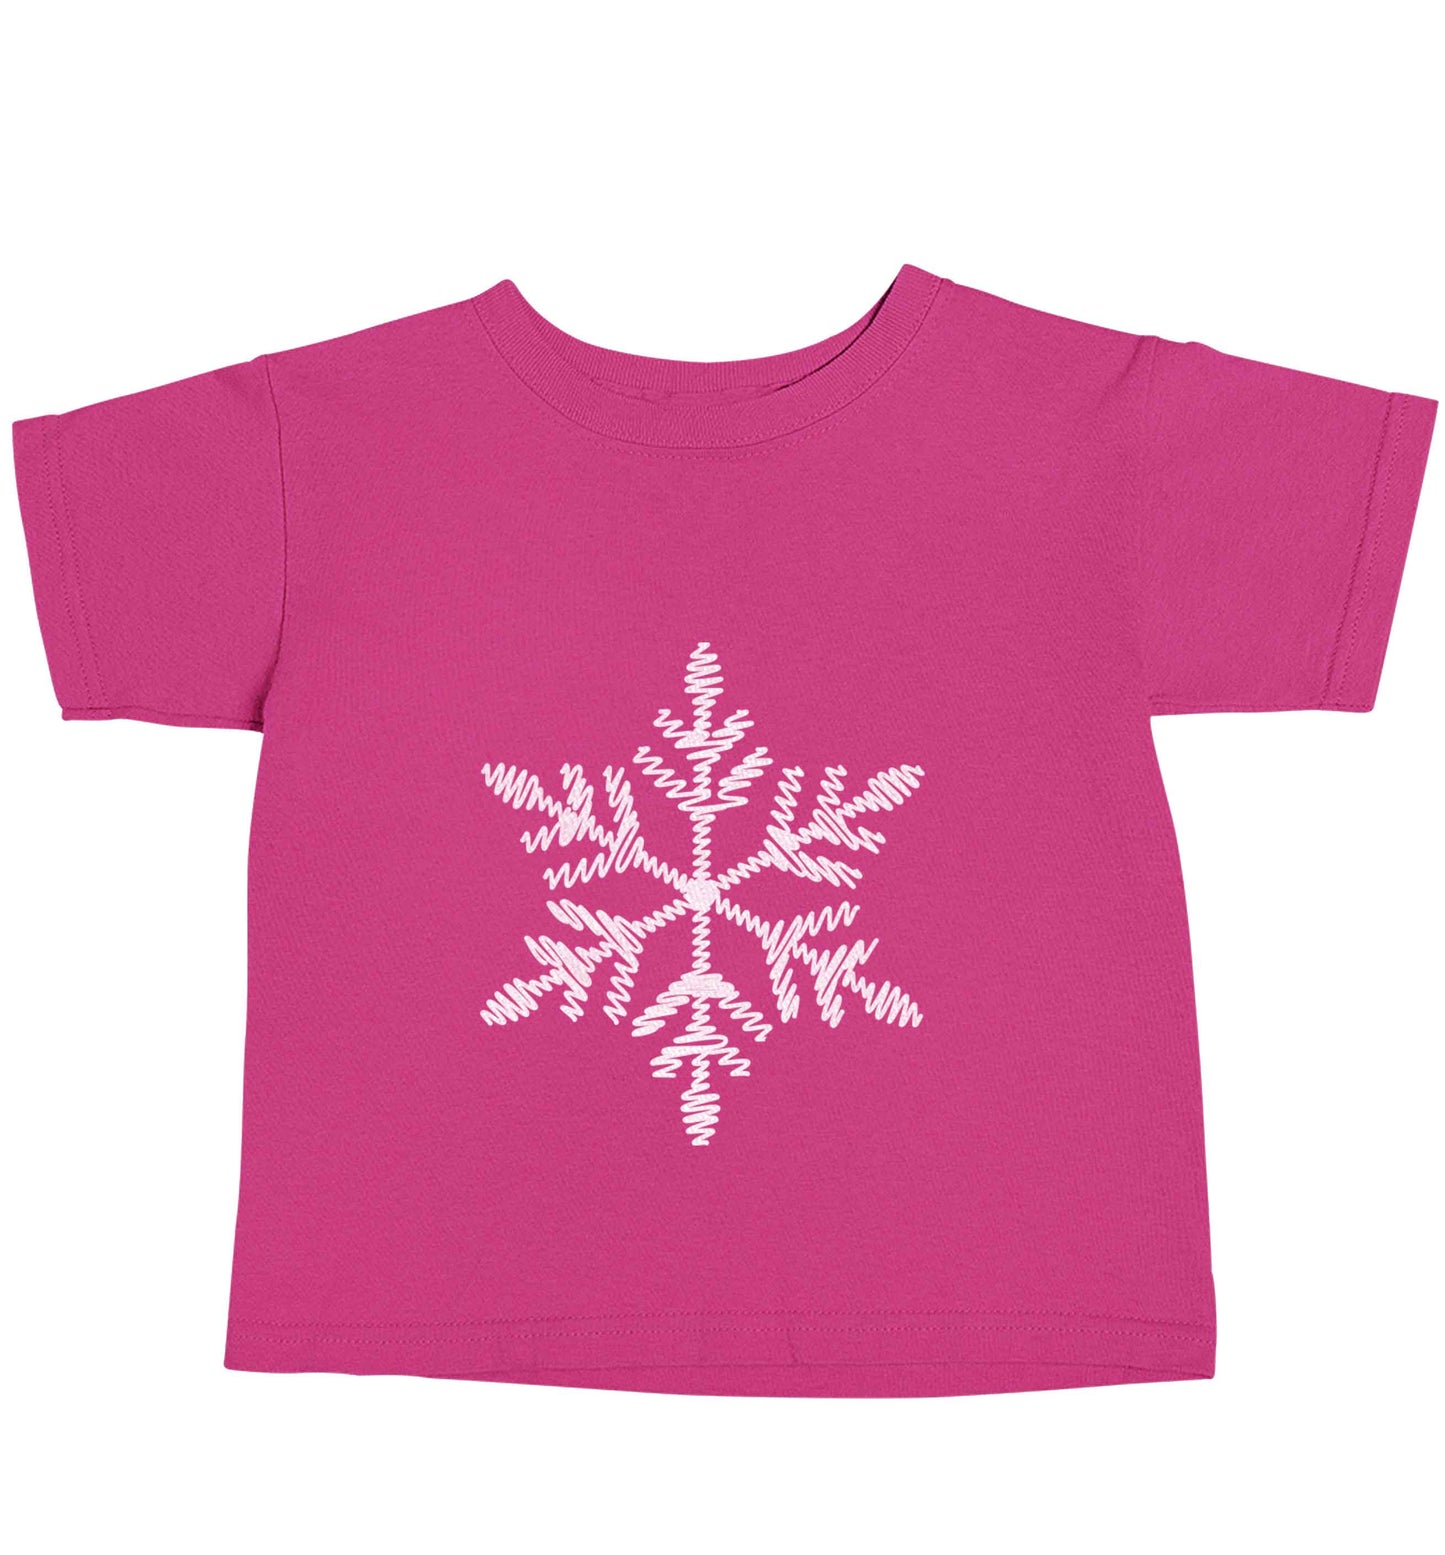 Snowflake pink baby toddler Tshirt 2 Years